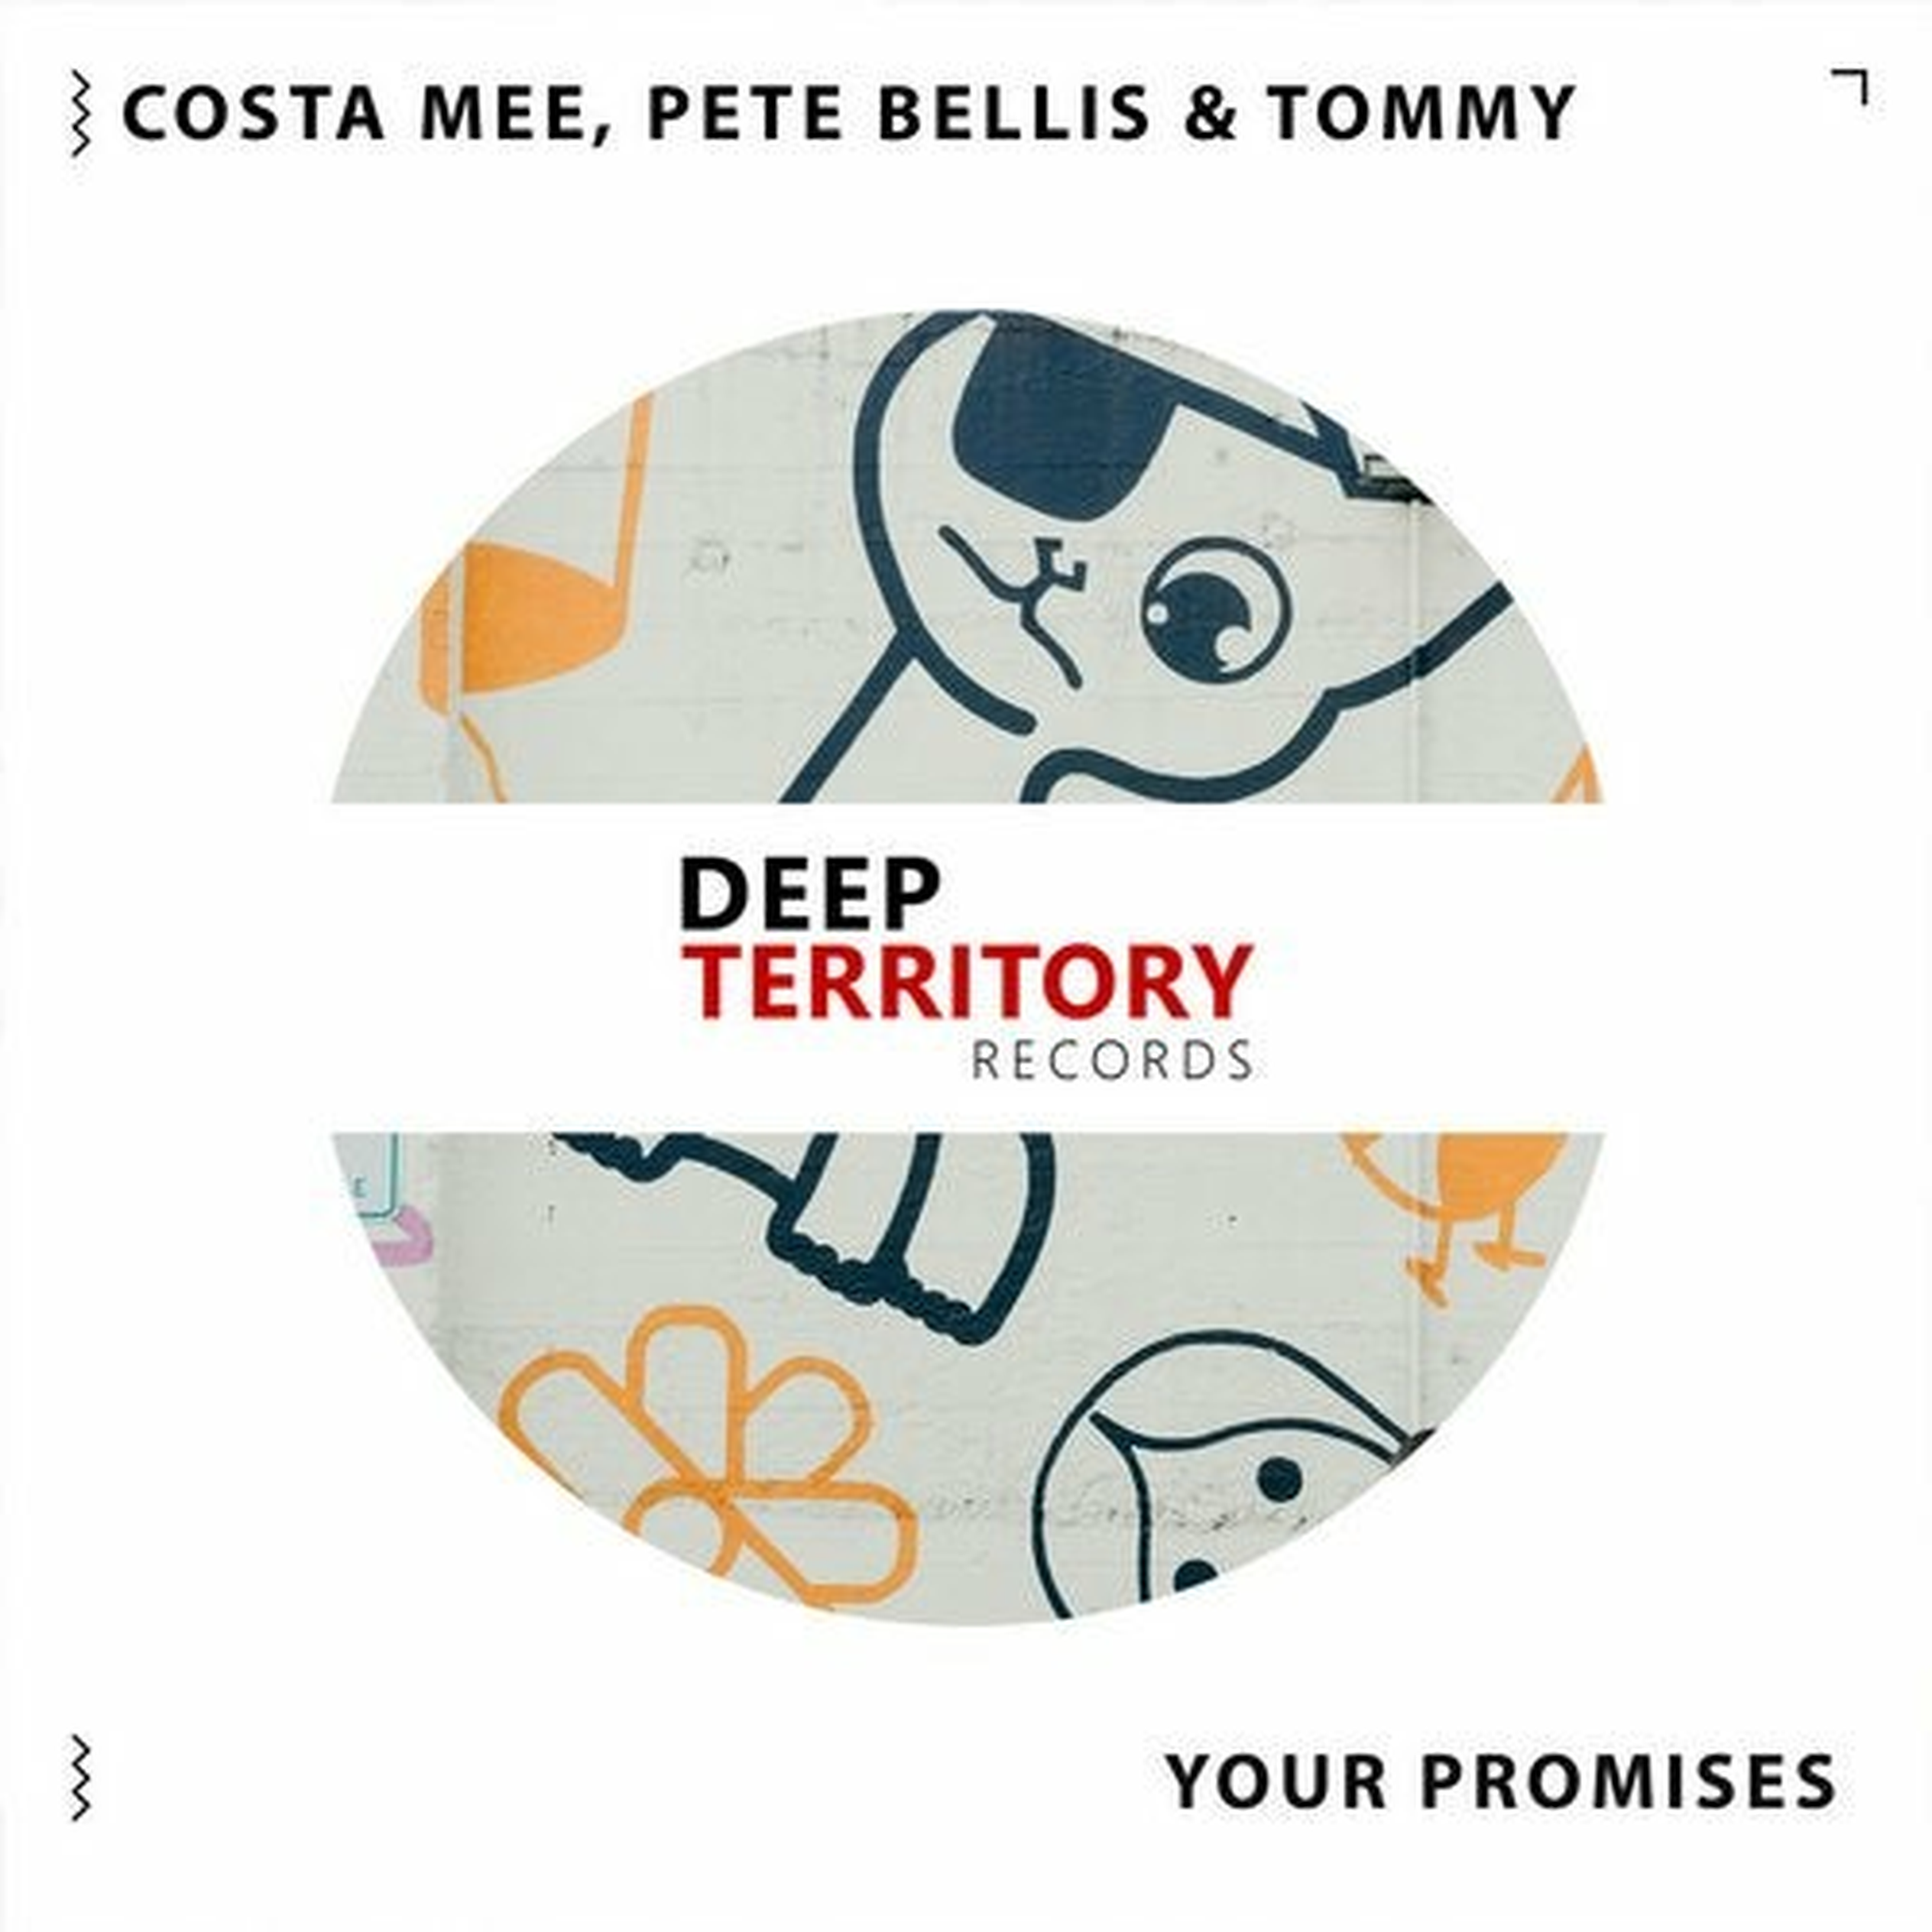 Costa me pete bellis tommy. Costa mee & Pete Bellis & Tommy. Costa mee & Pete Bellis & Tommy - empty Promises. Costa mee Pete Bellis Tommy looking for you. Pete Bellis Deep Territory.